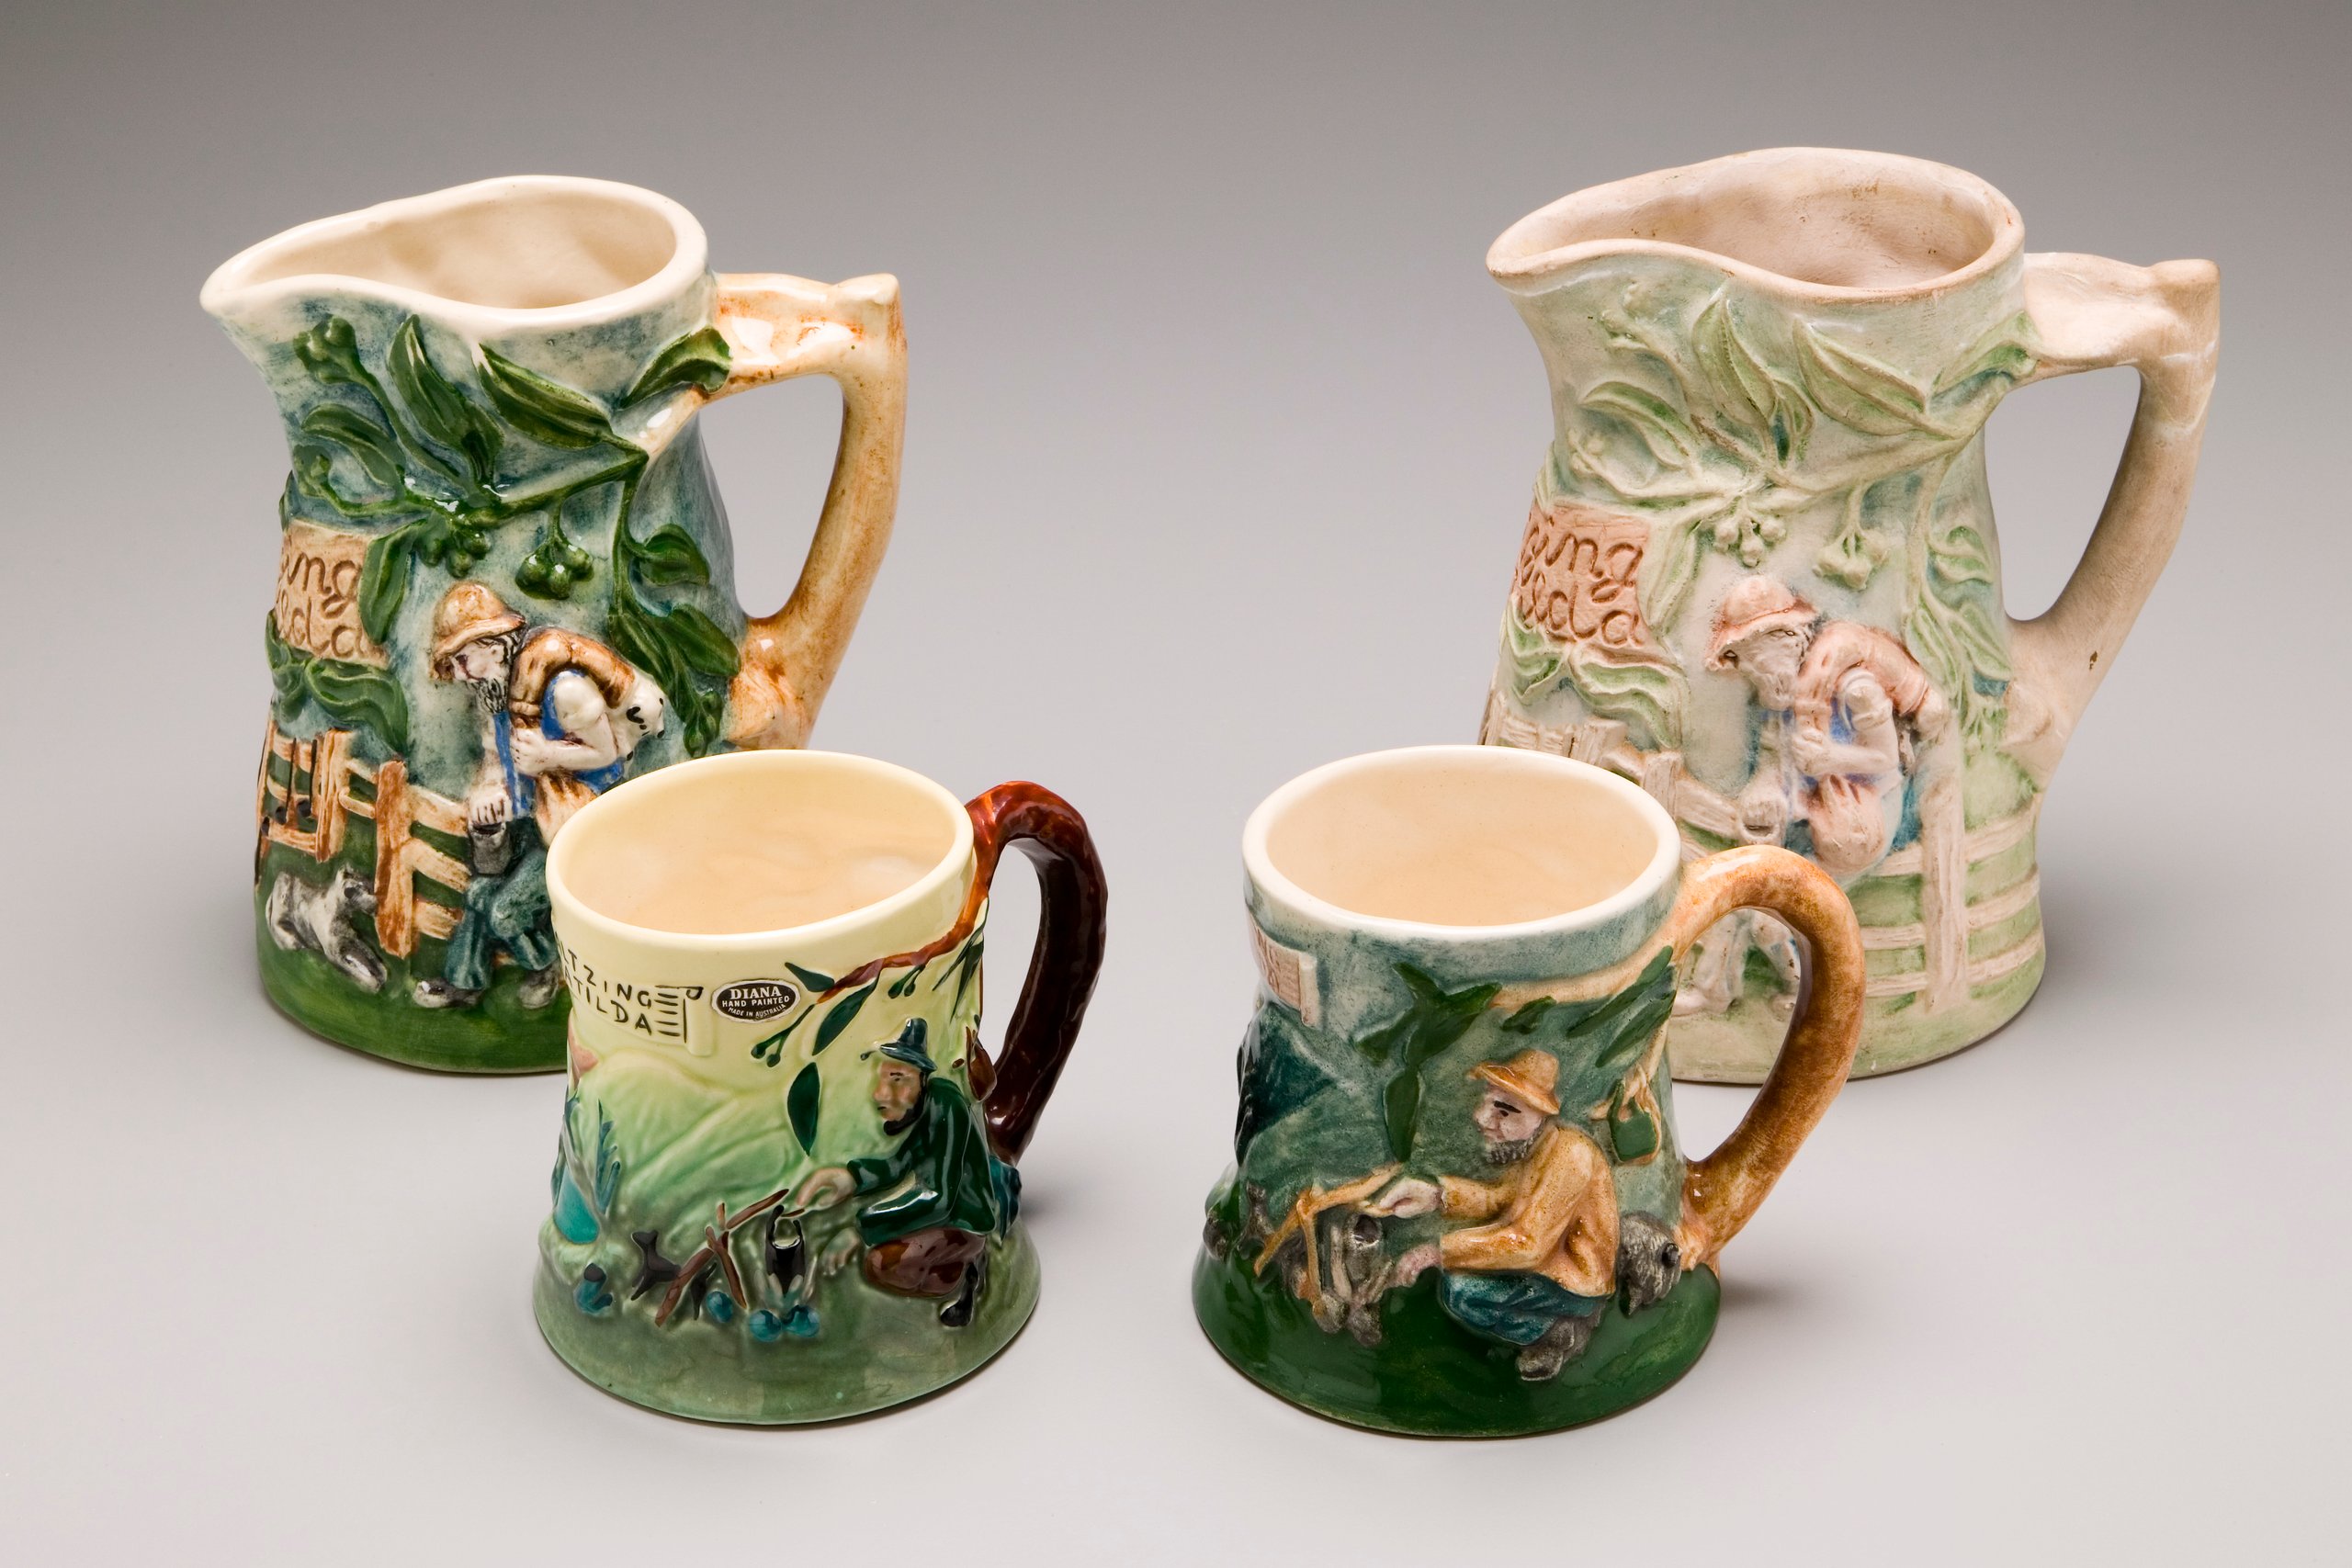 'Waltzing Matilda' musical mugs and jugs made by Diana Ware